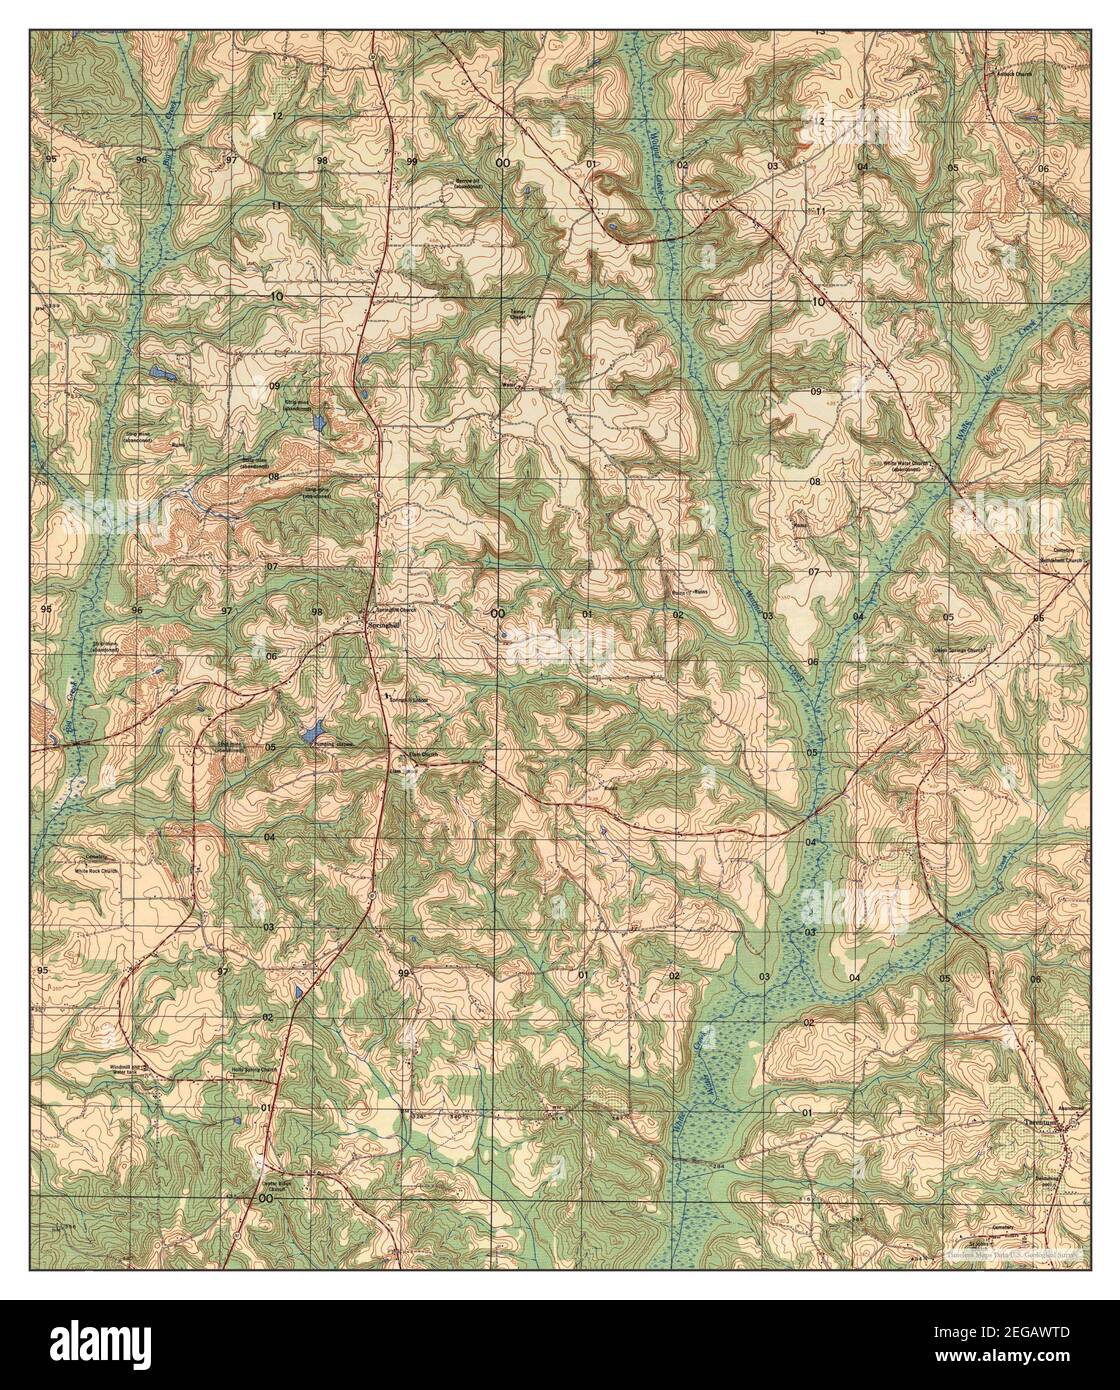 Brundidge NW, Alabama, map 1962, 1:25000, United States of America by Timeless Maps, data U.S. Geological Survey Stock Photo